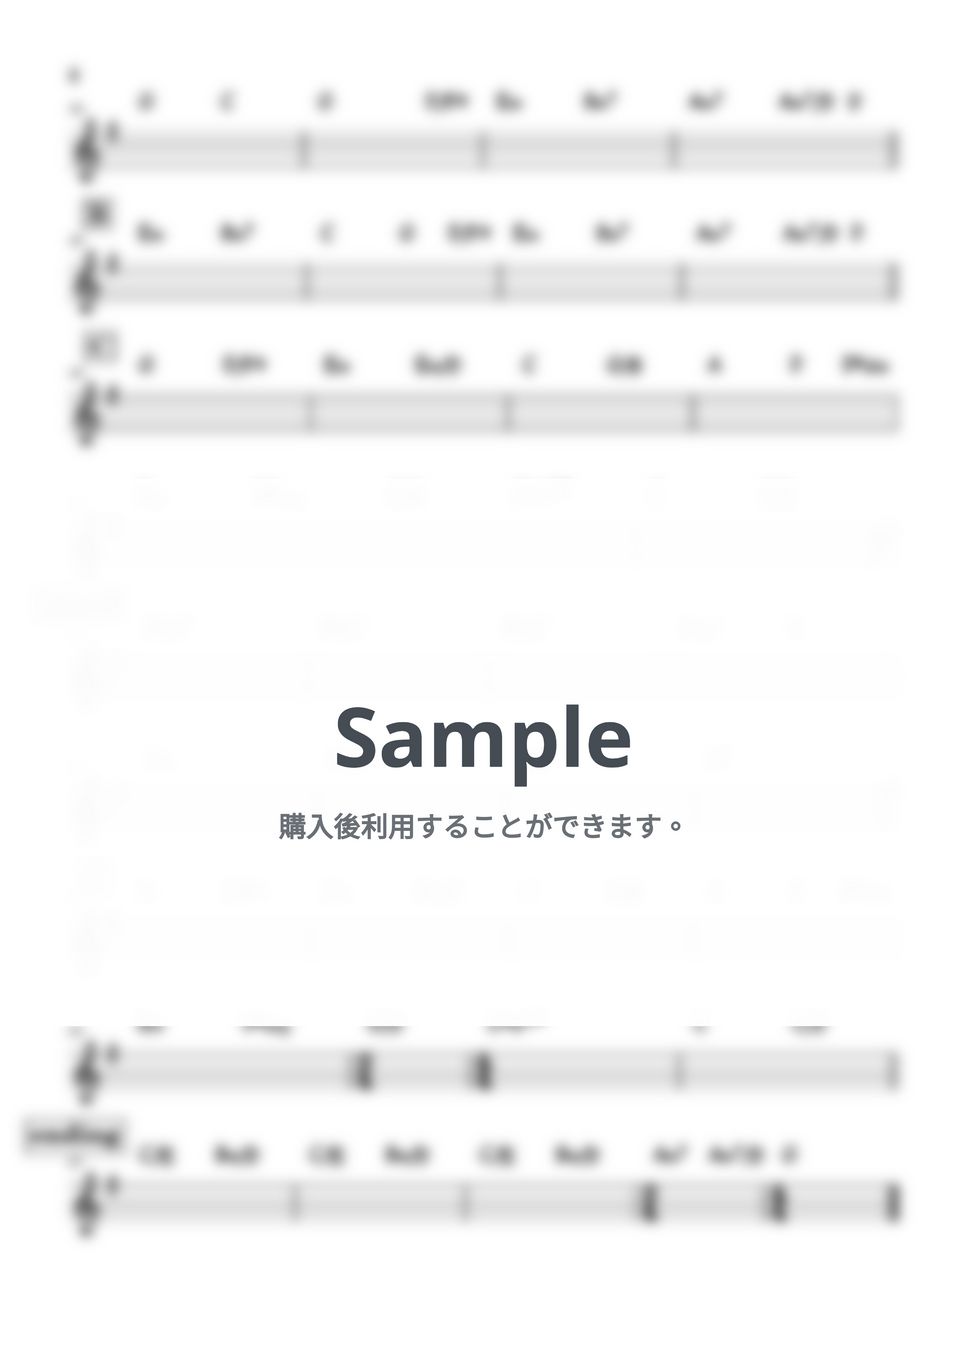 BanK Band - 糸 (BanK Band version　バンド用コード譜) by 箱譜屋